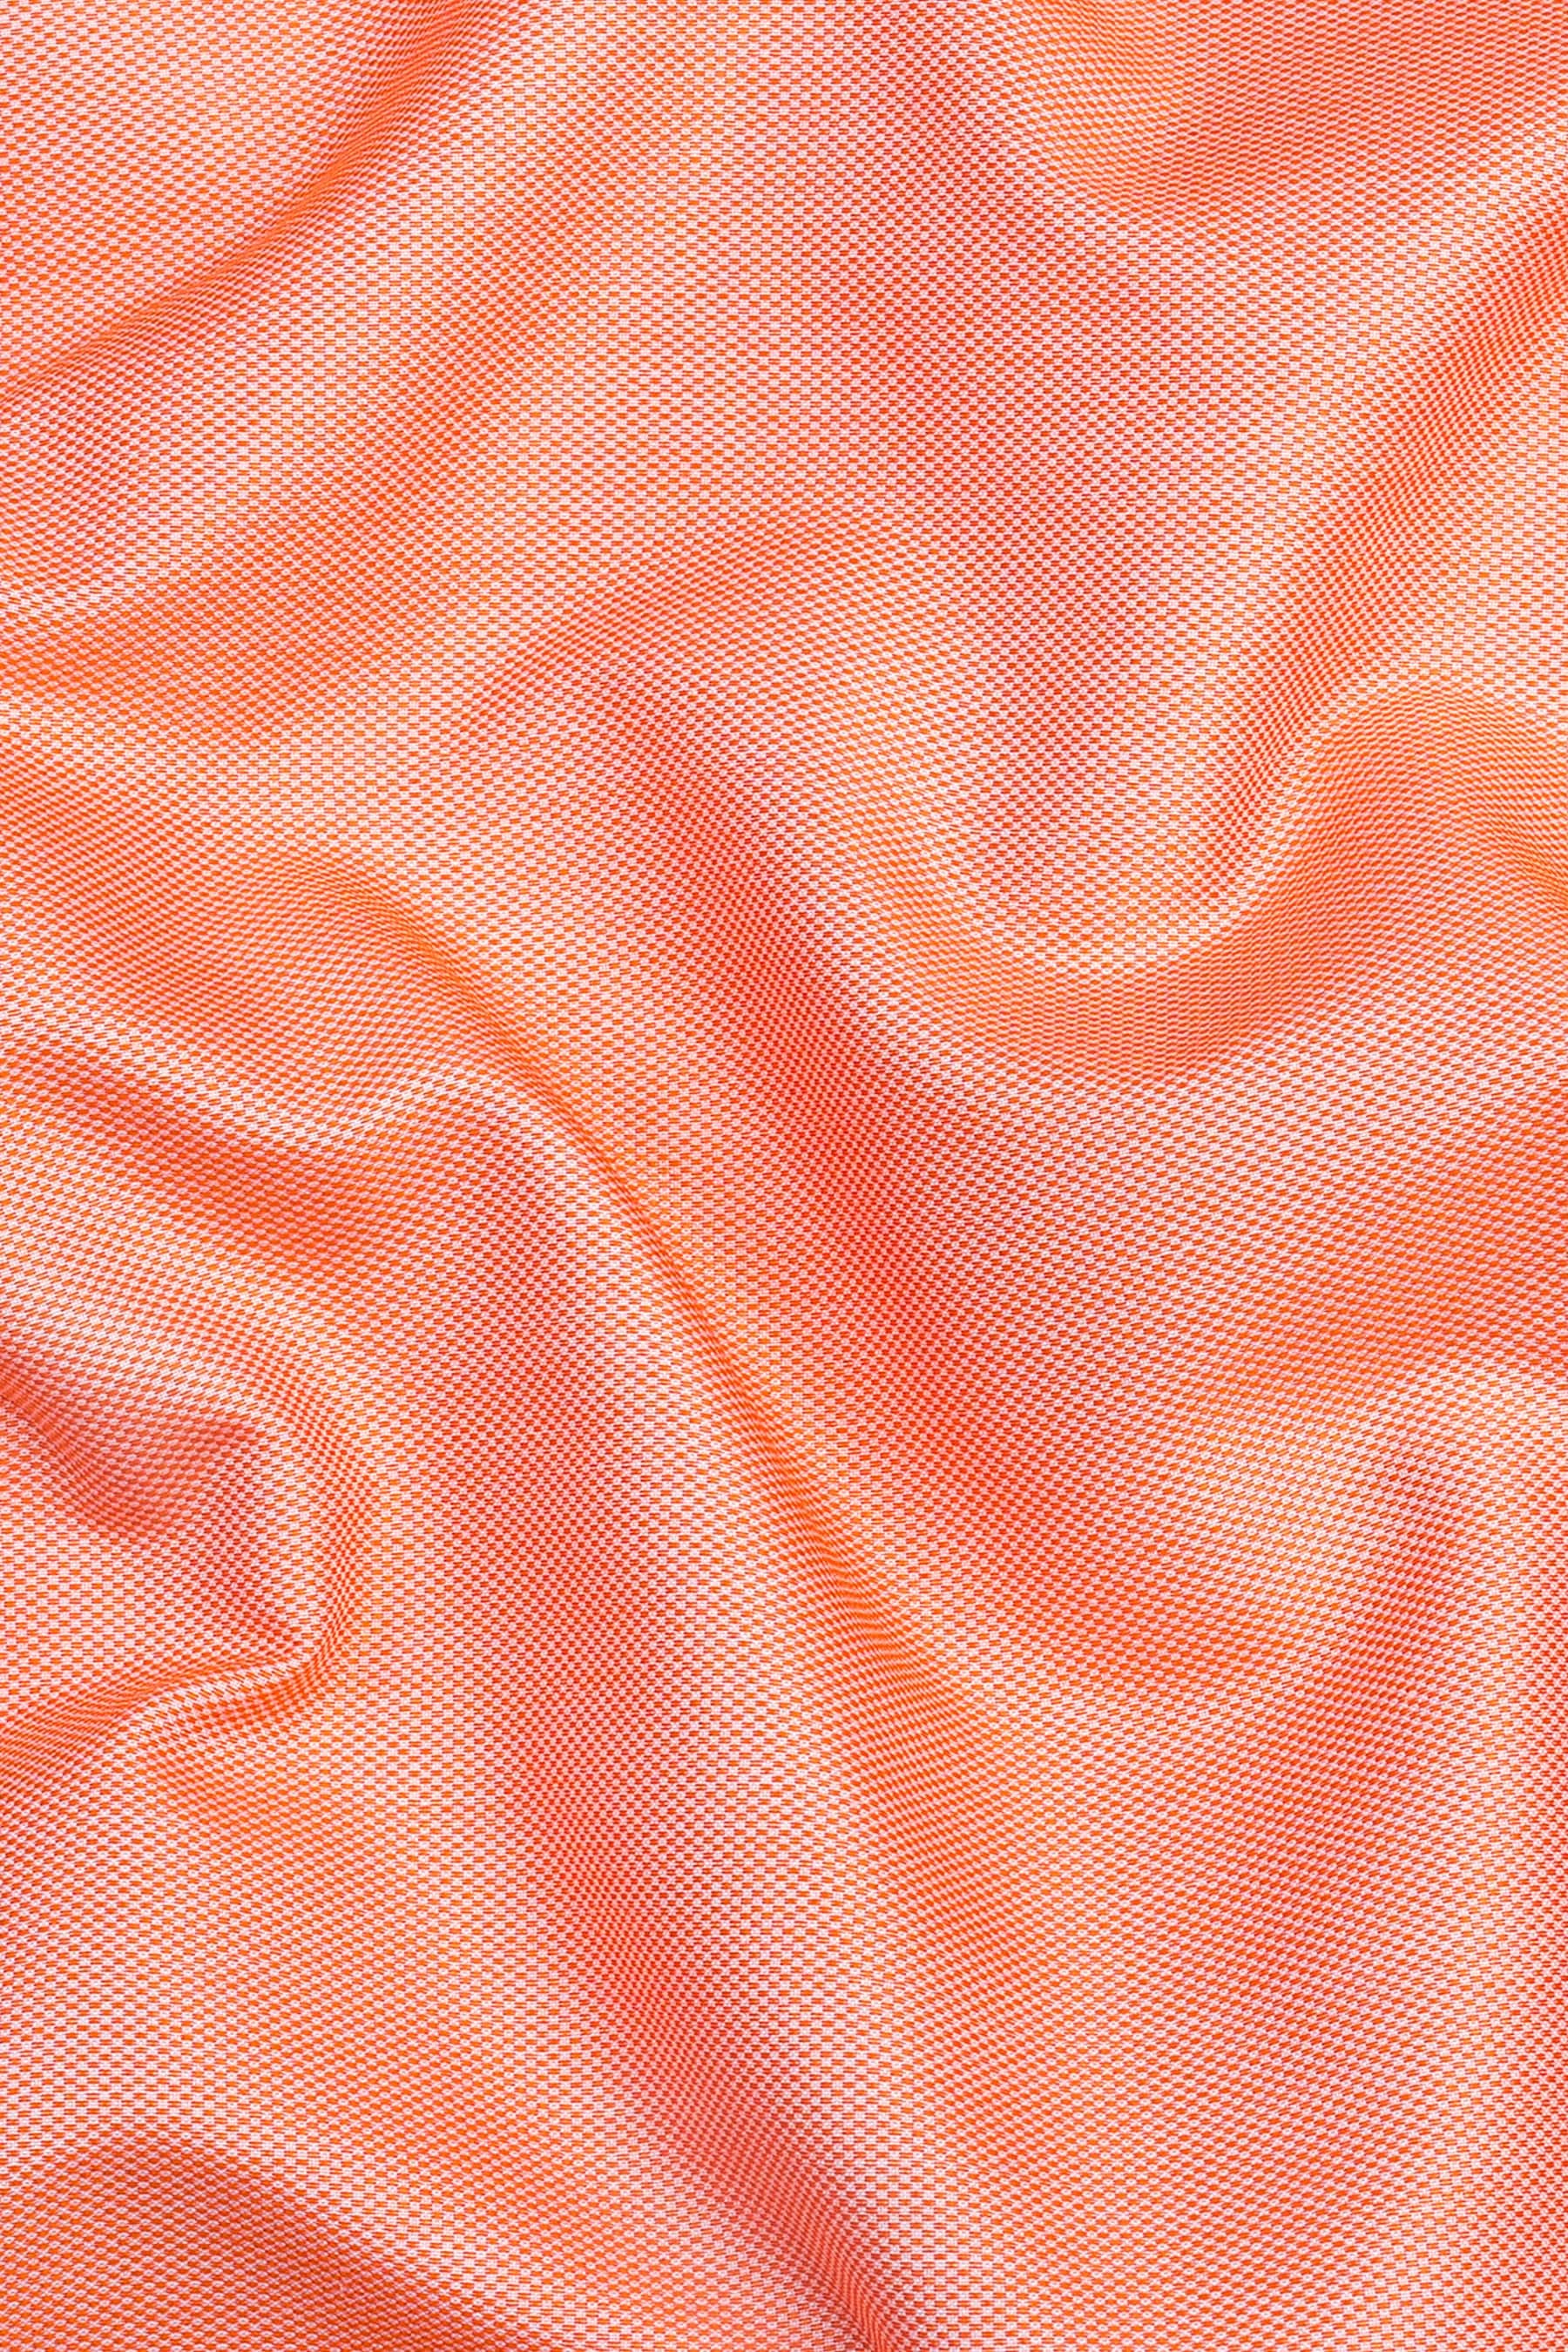 Salmon orange dobby texture shirt